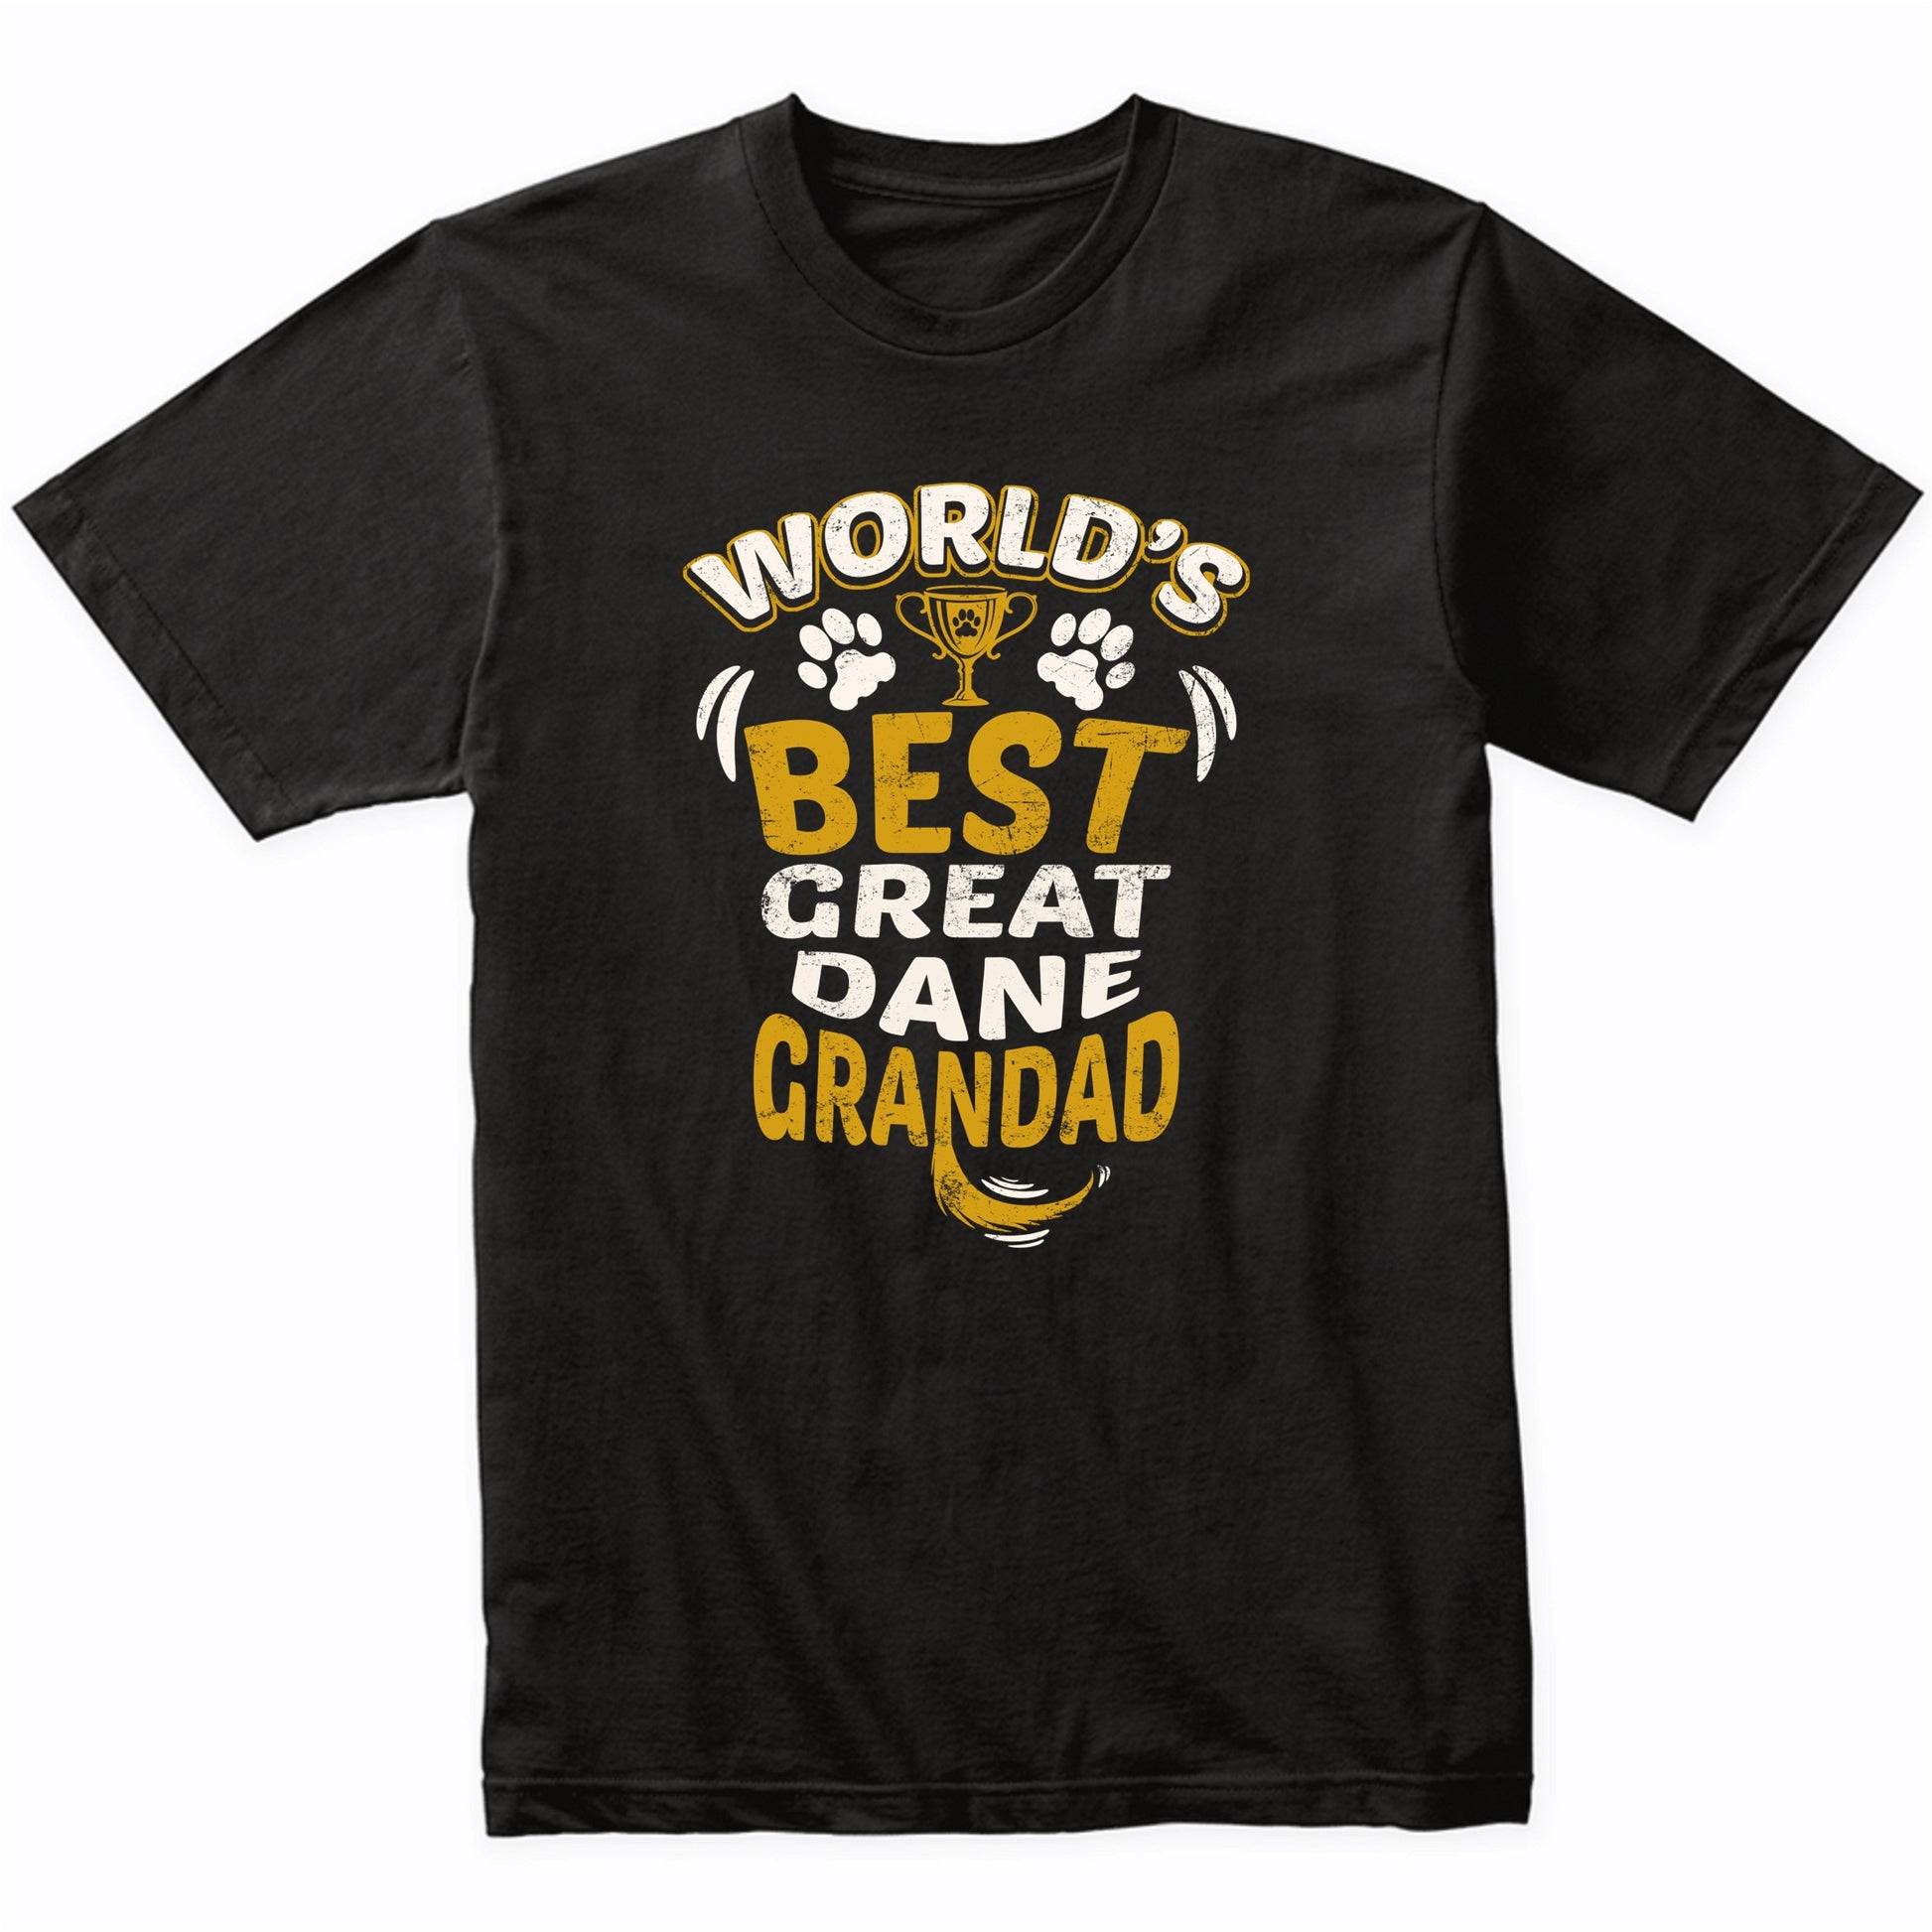 World's Best Great Dane Grandad Graphic T-Shirt